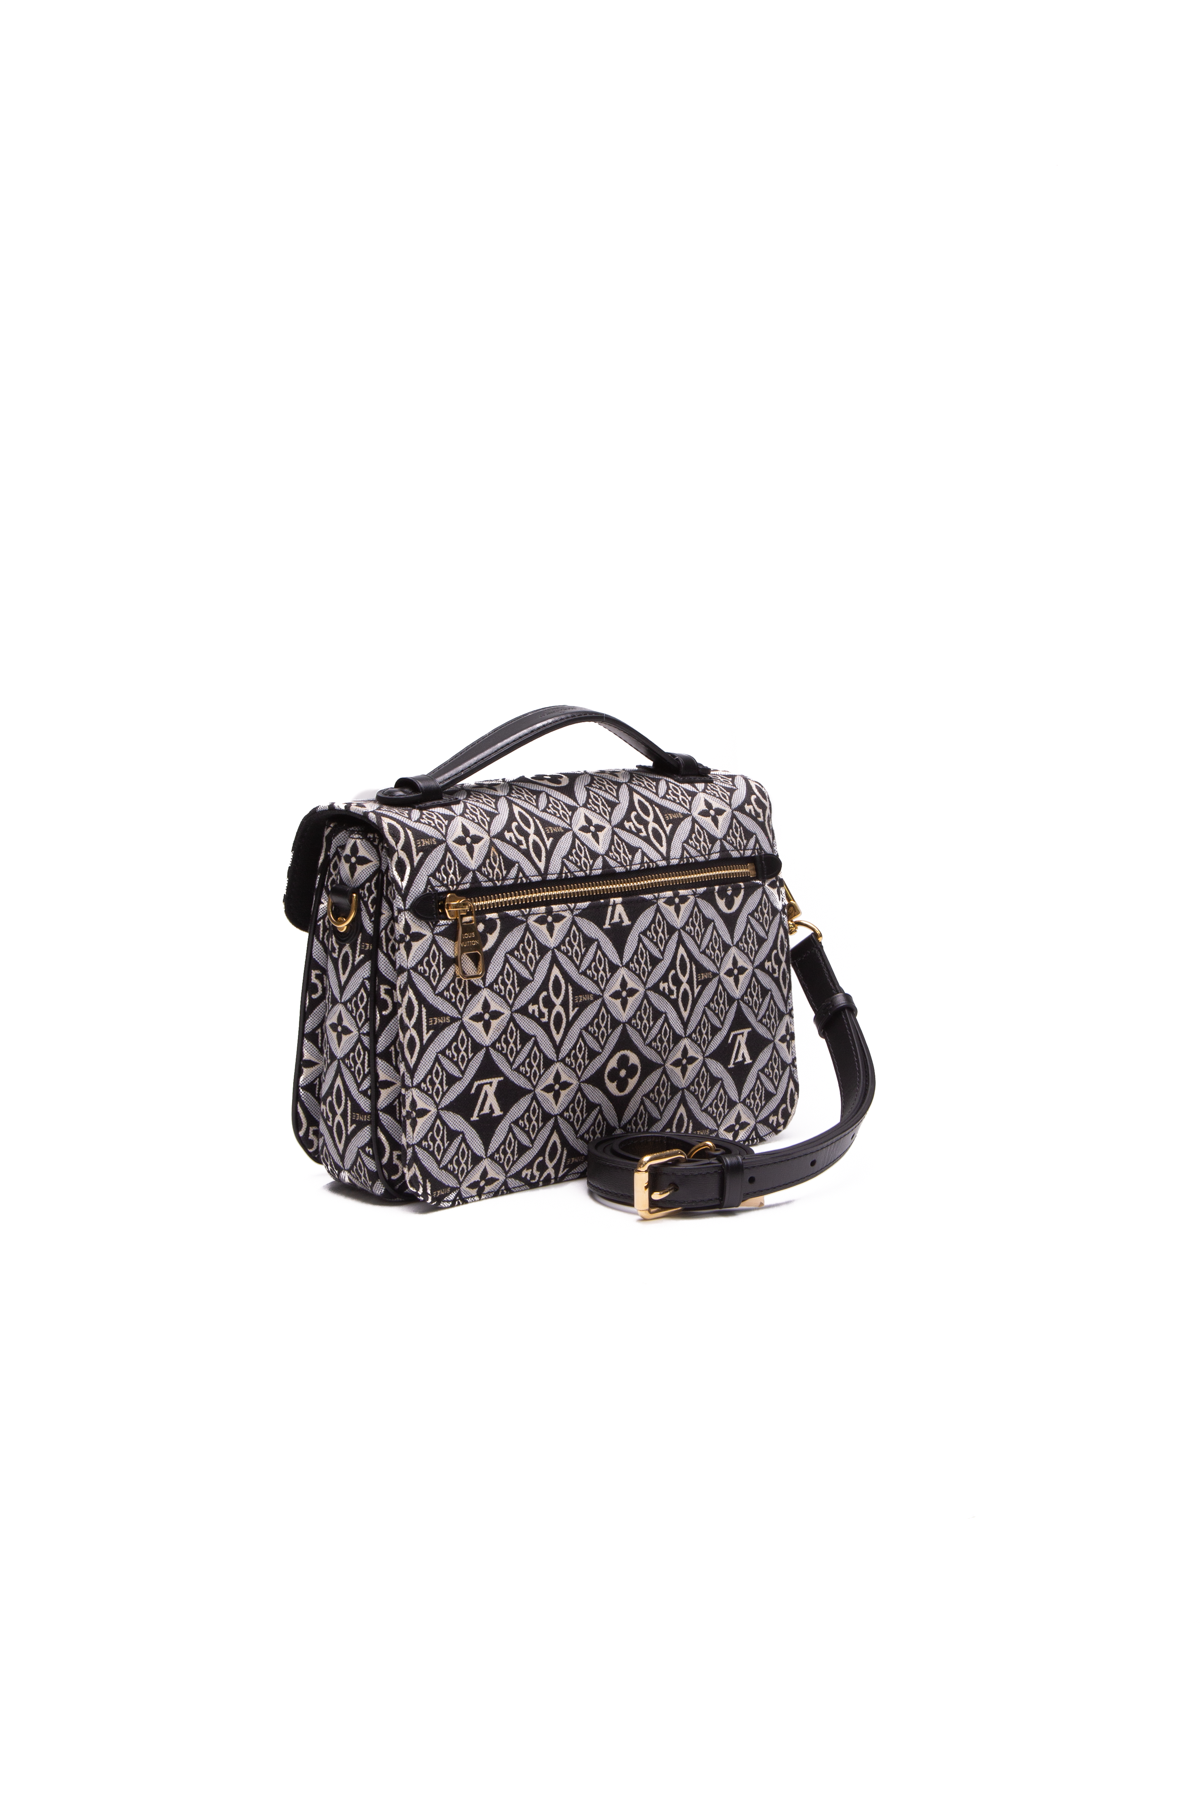 Louis Vuitton Pochette Metis Bag